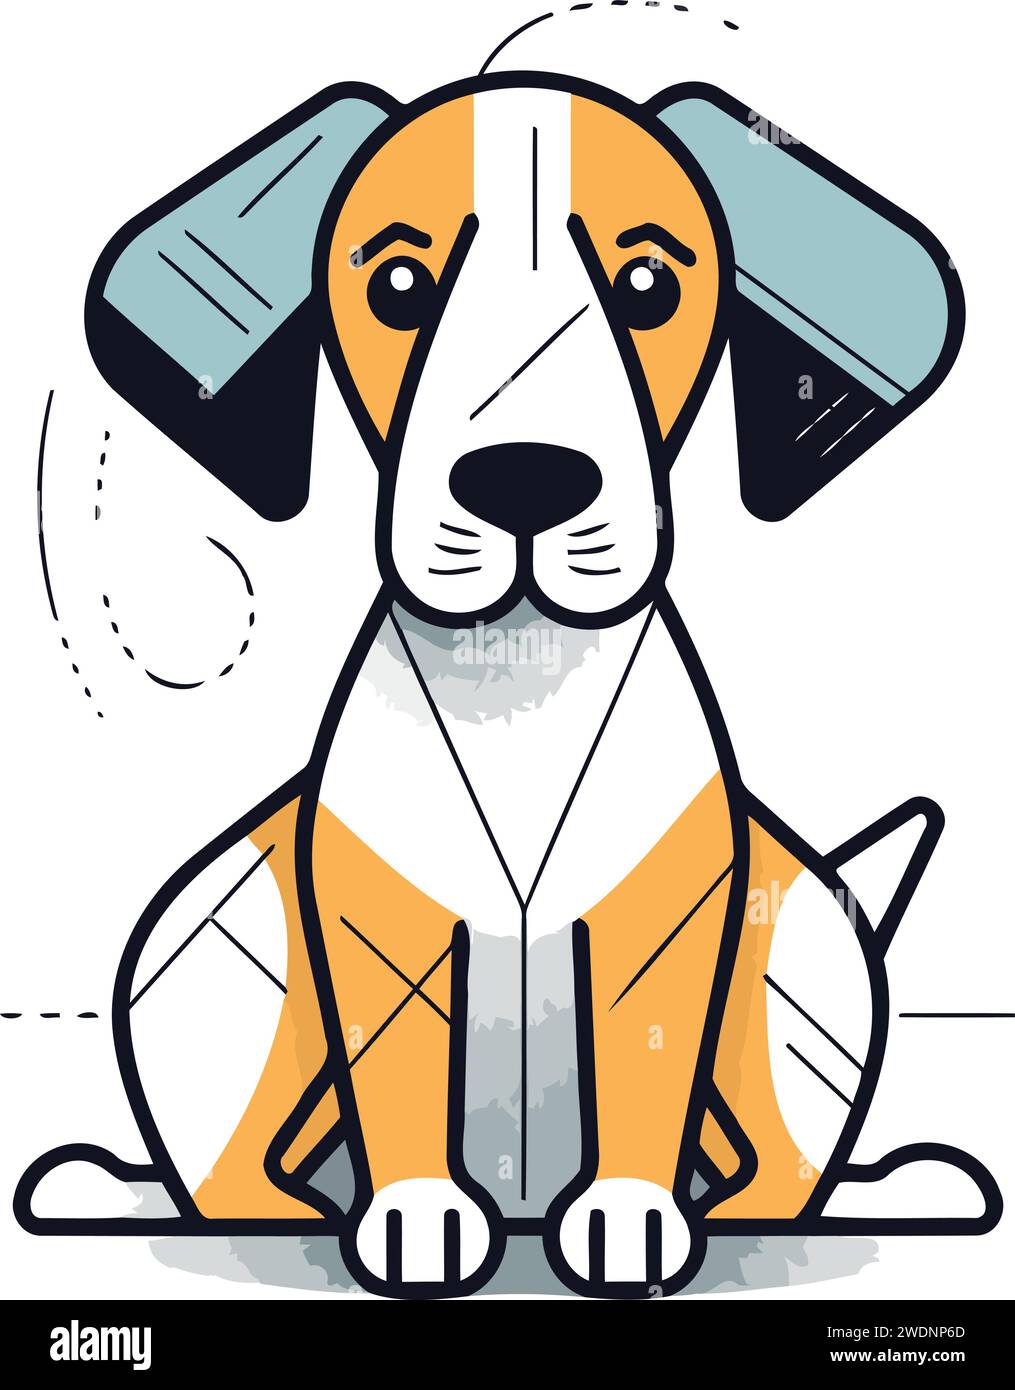 Lustiger Zeichentrickhund. Vektorillustration eines Hundes mit Knochen. Stock Vektor